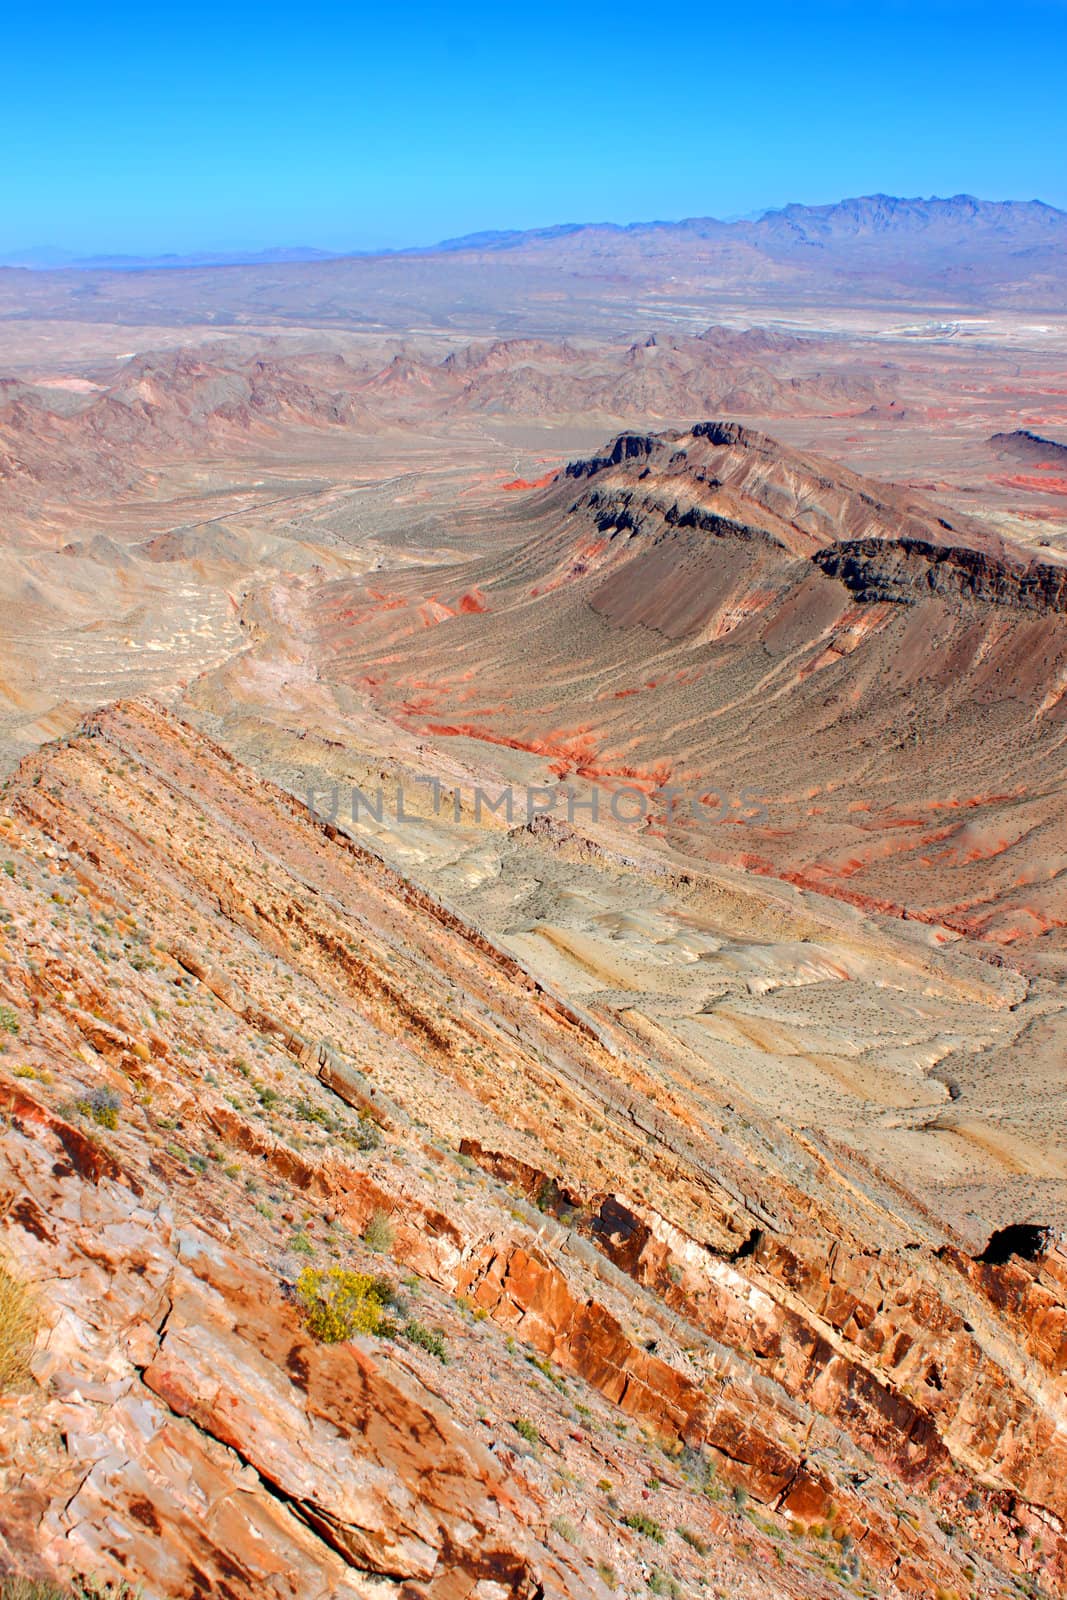 Desert Environment Nevada by Wirepec